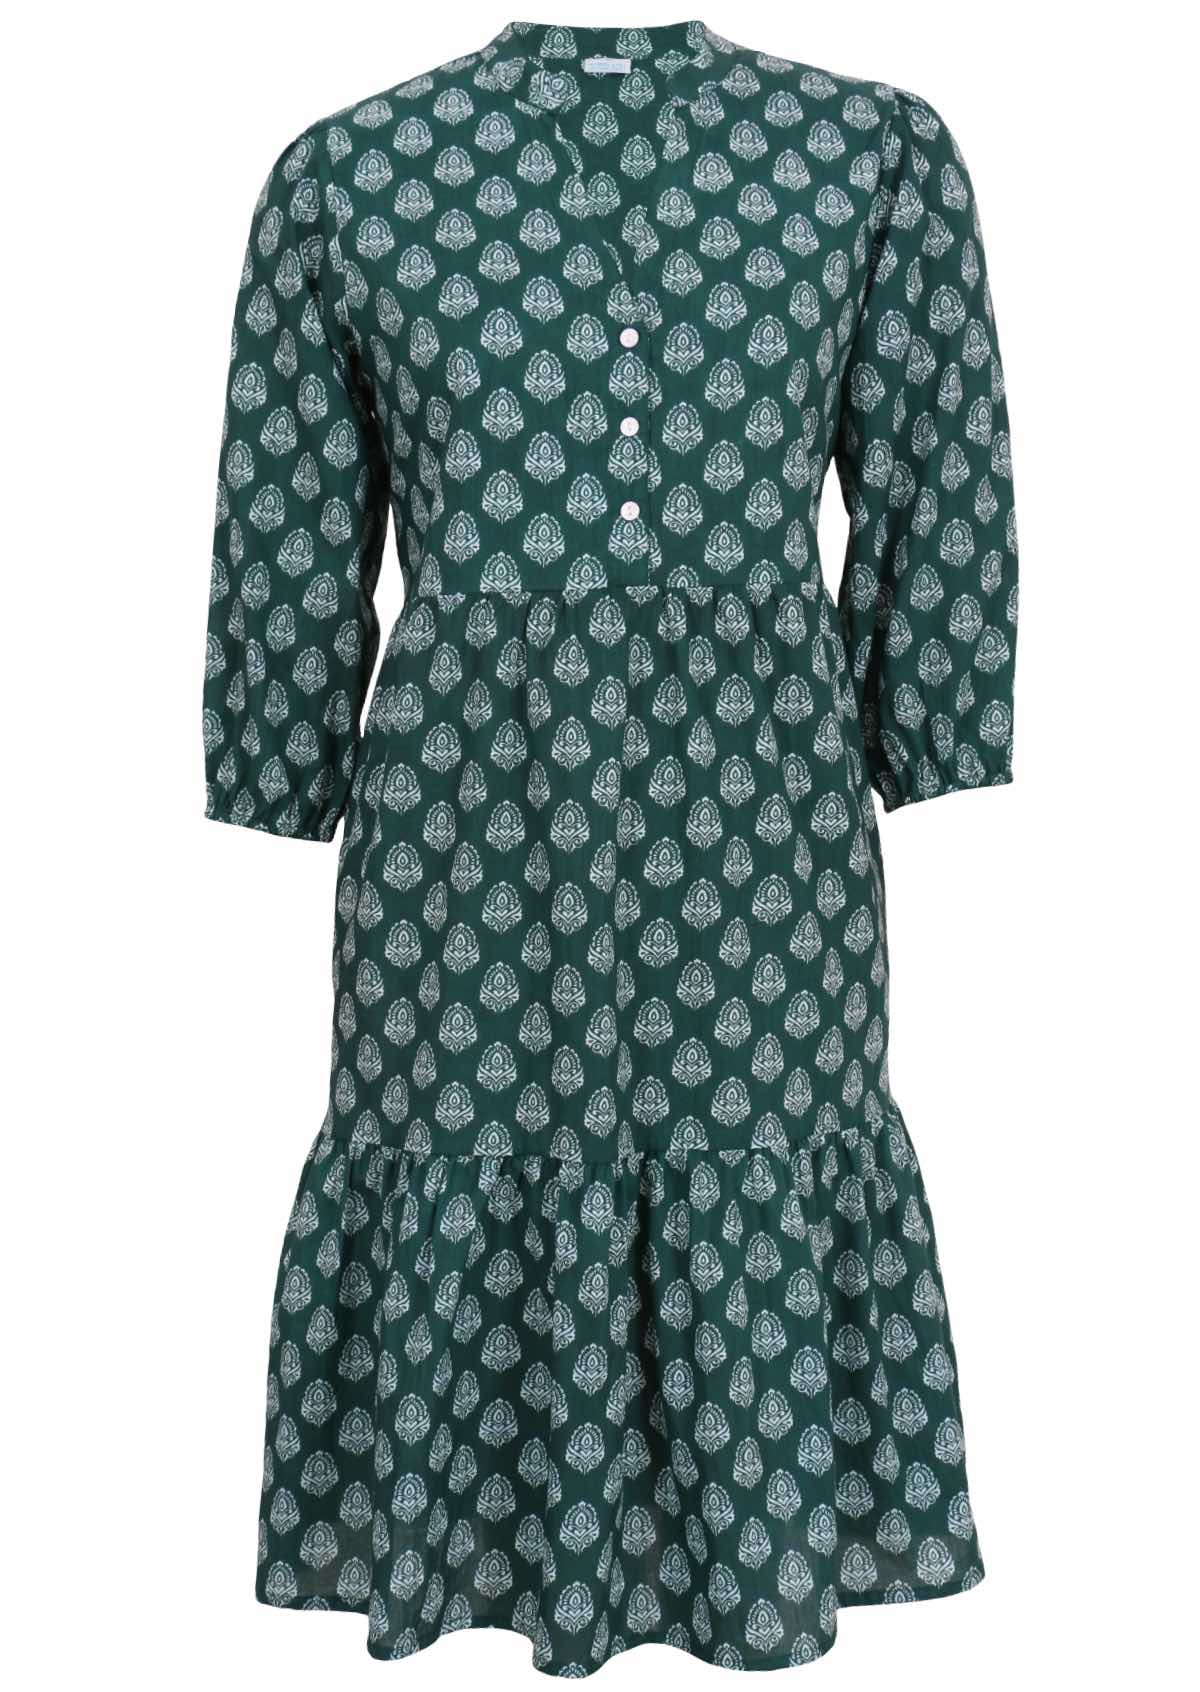 Lightweight cotton boho midi dress with 3/4 sleeves